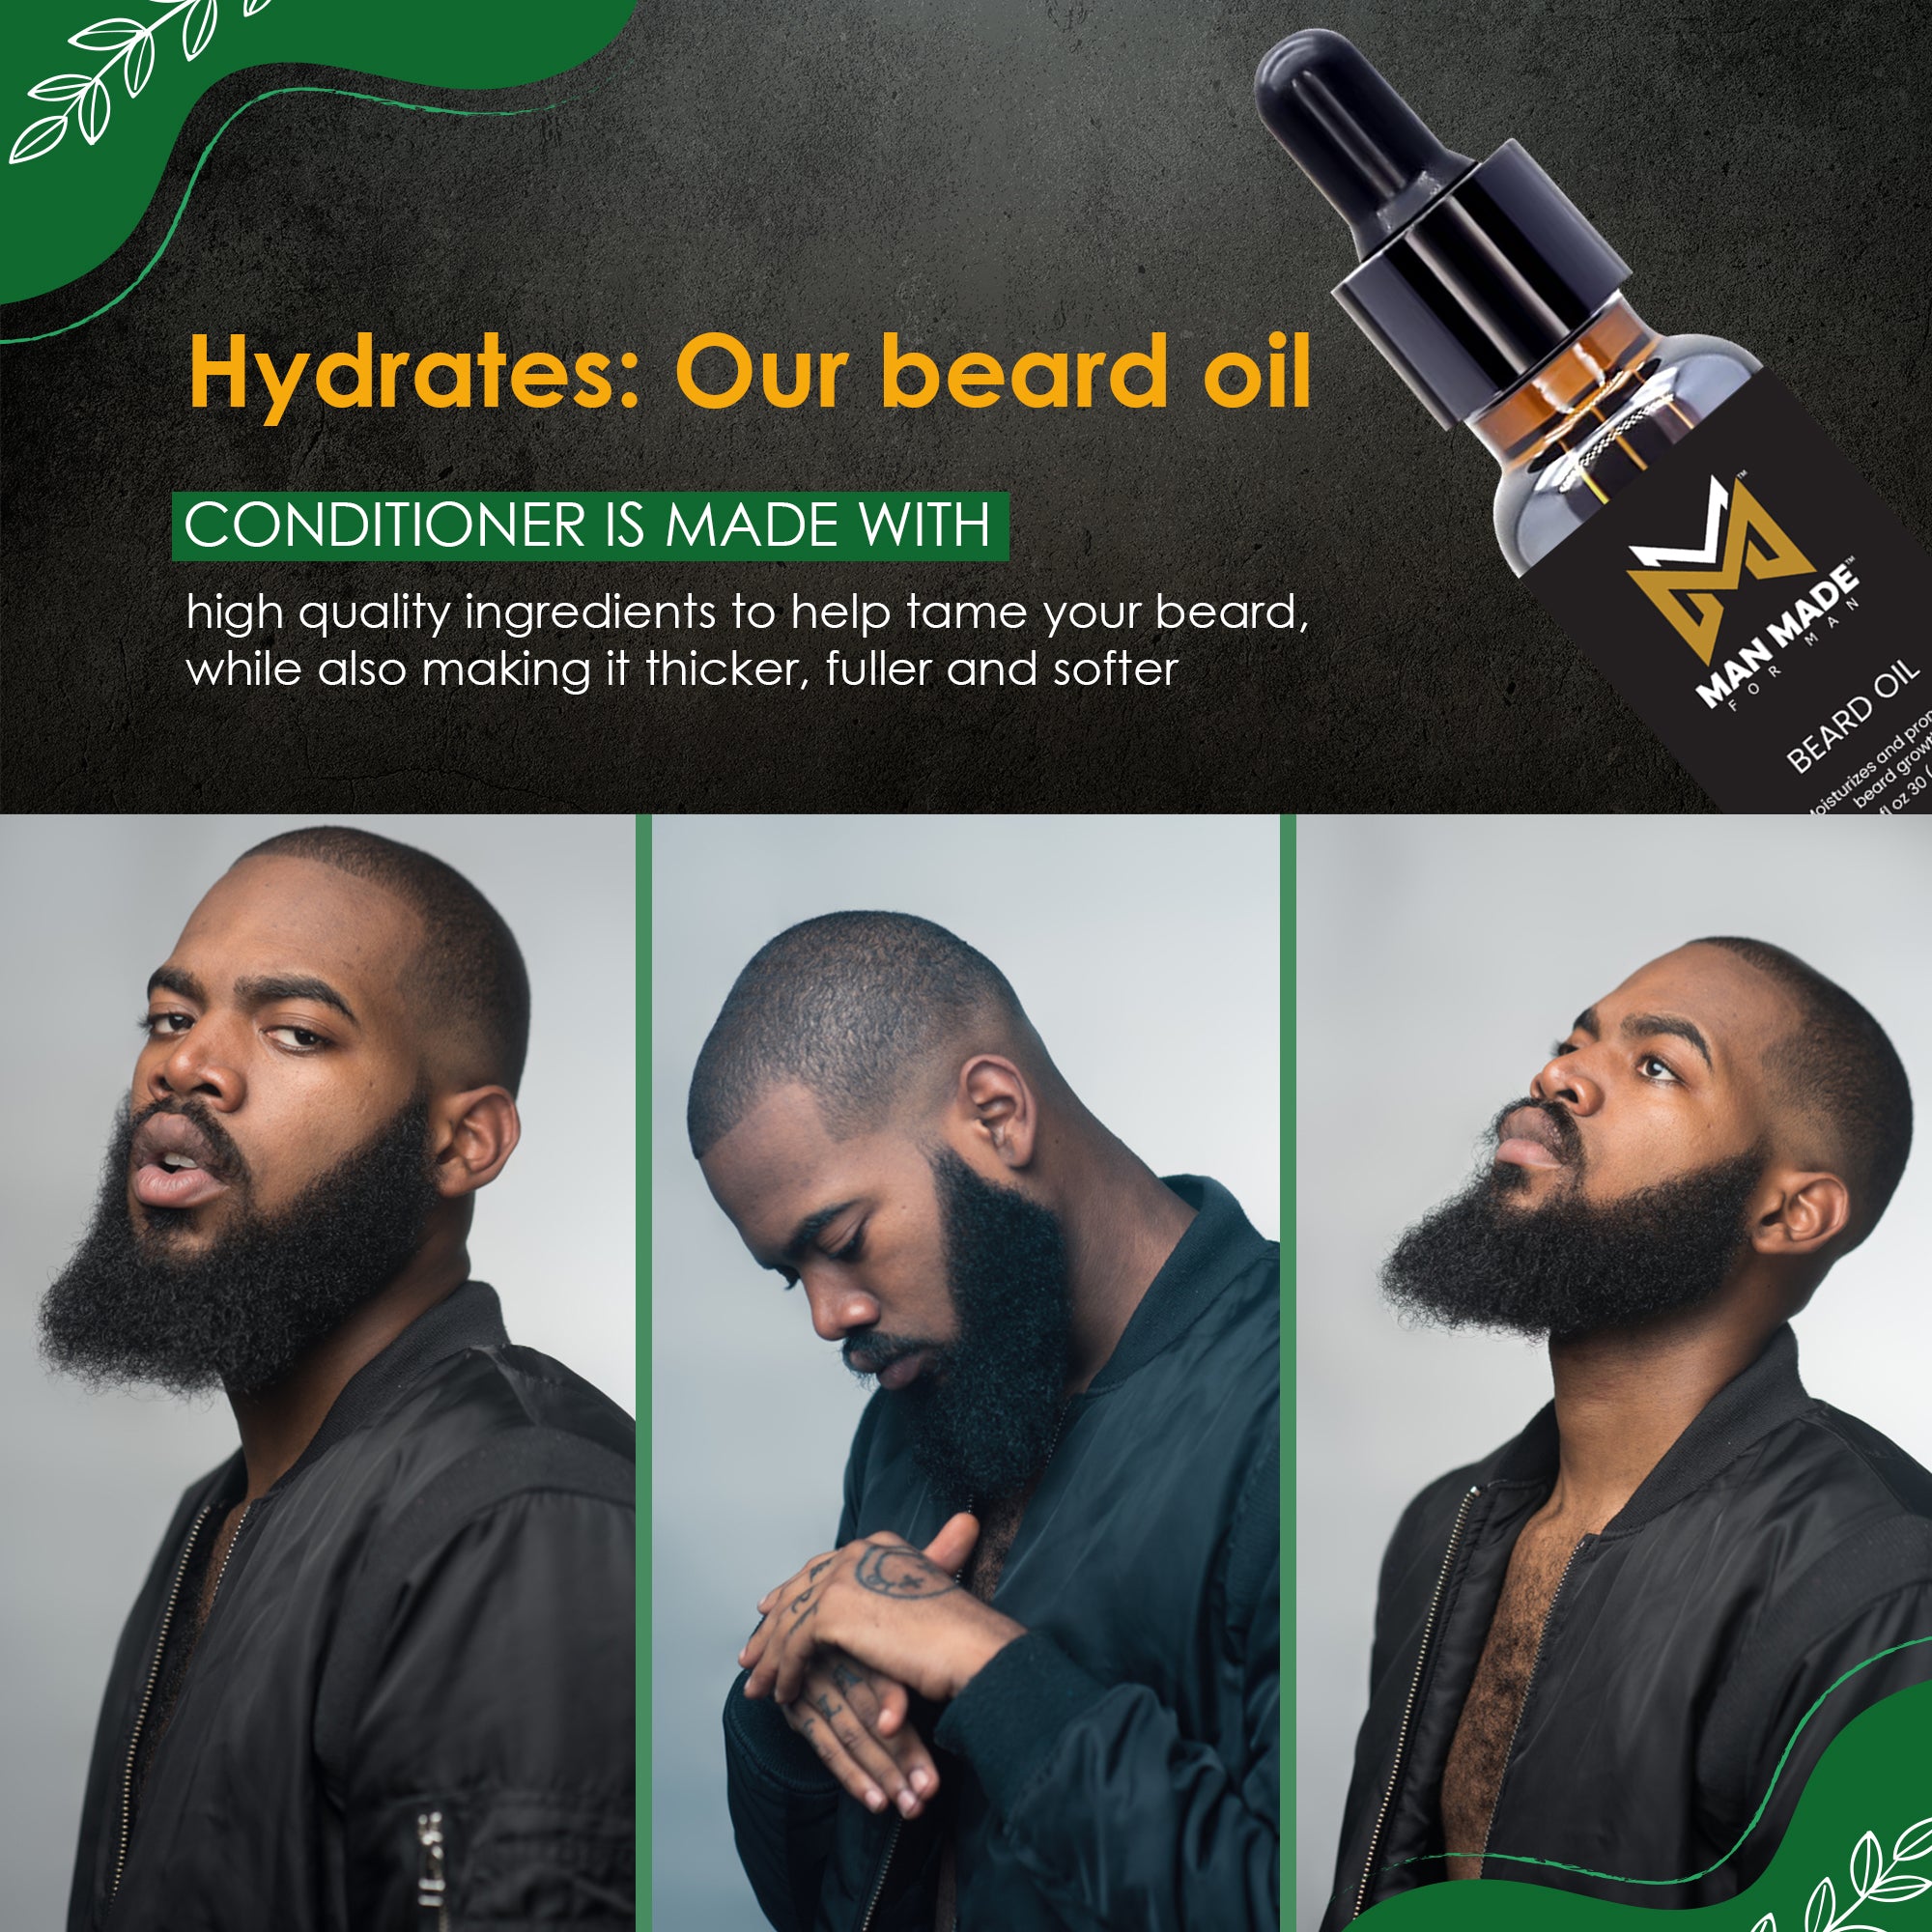 Man Made for Man Beard Oil Moisturize and Growth (1 fl oz)